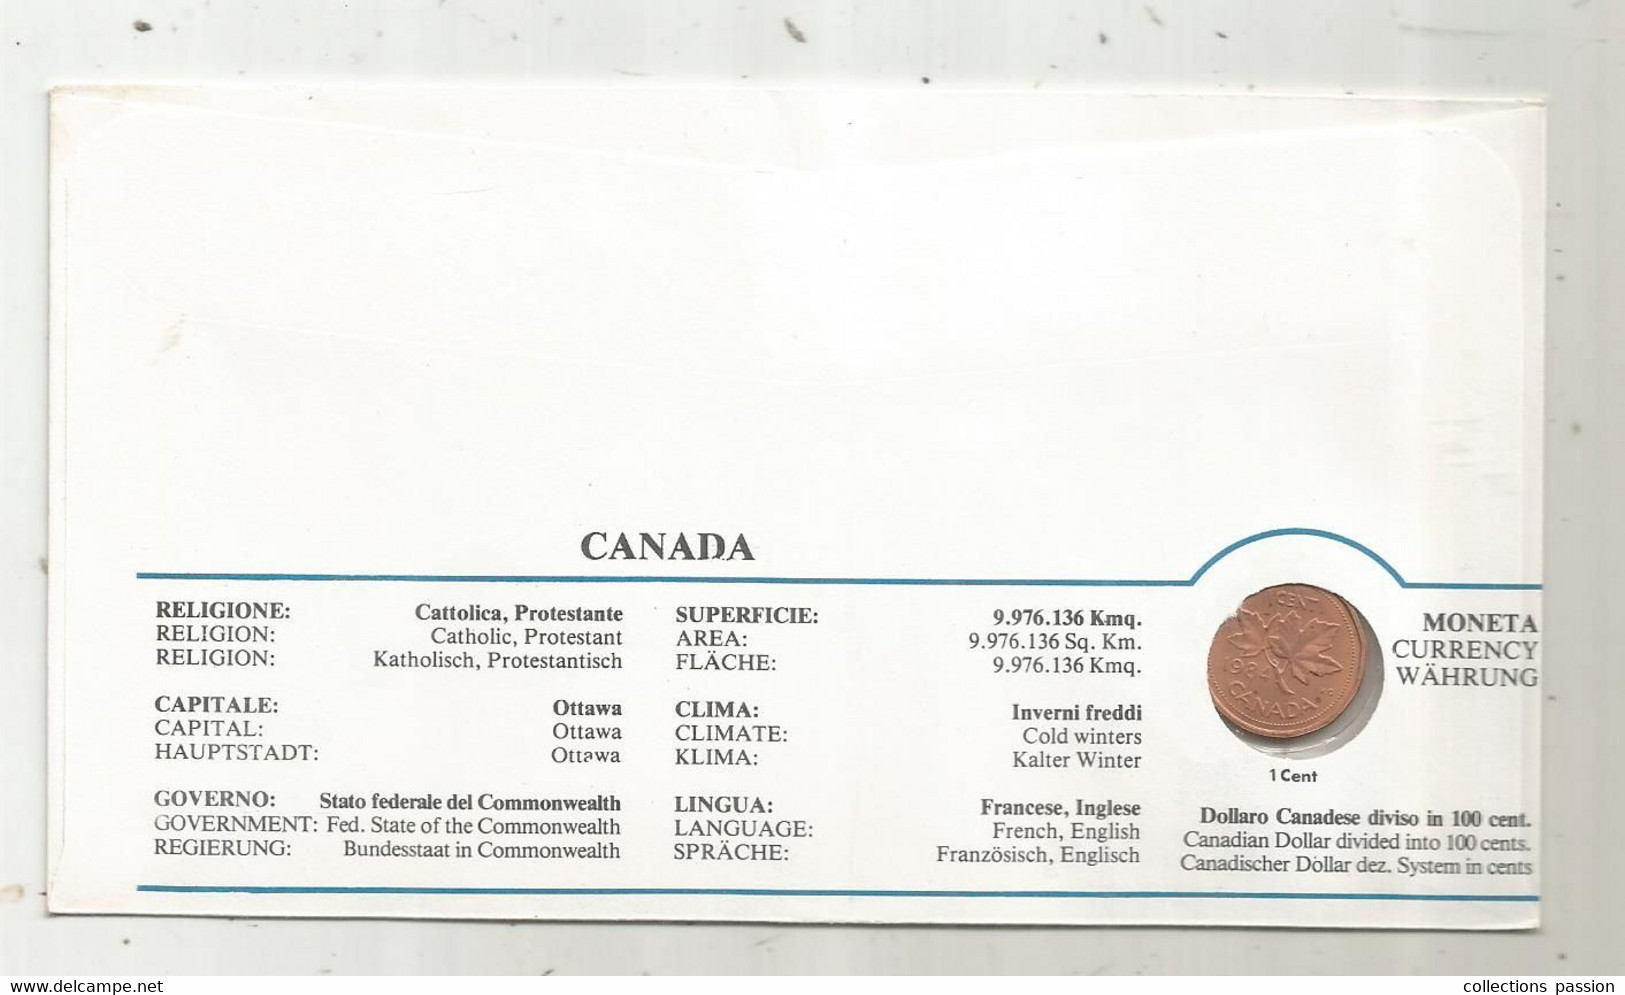 Lettre, CANADA,OTTAWA,1984+ Monnaie,currency, 1 CENT , 1984, Filagrano Numicover, Pape,  Frais Fr 1.95 E - Enveloppes Commémoratives